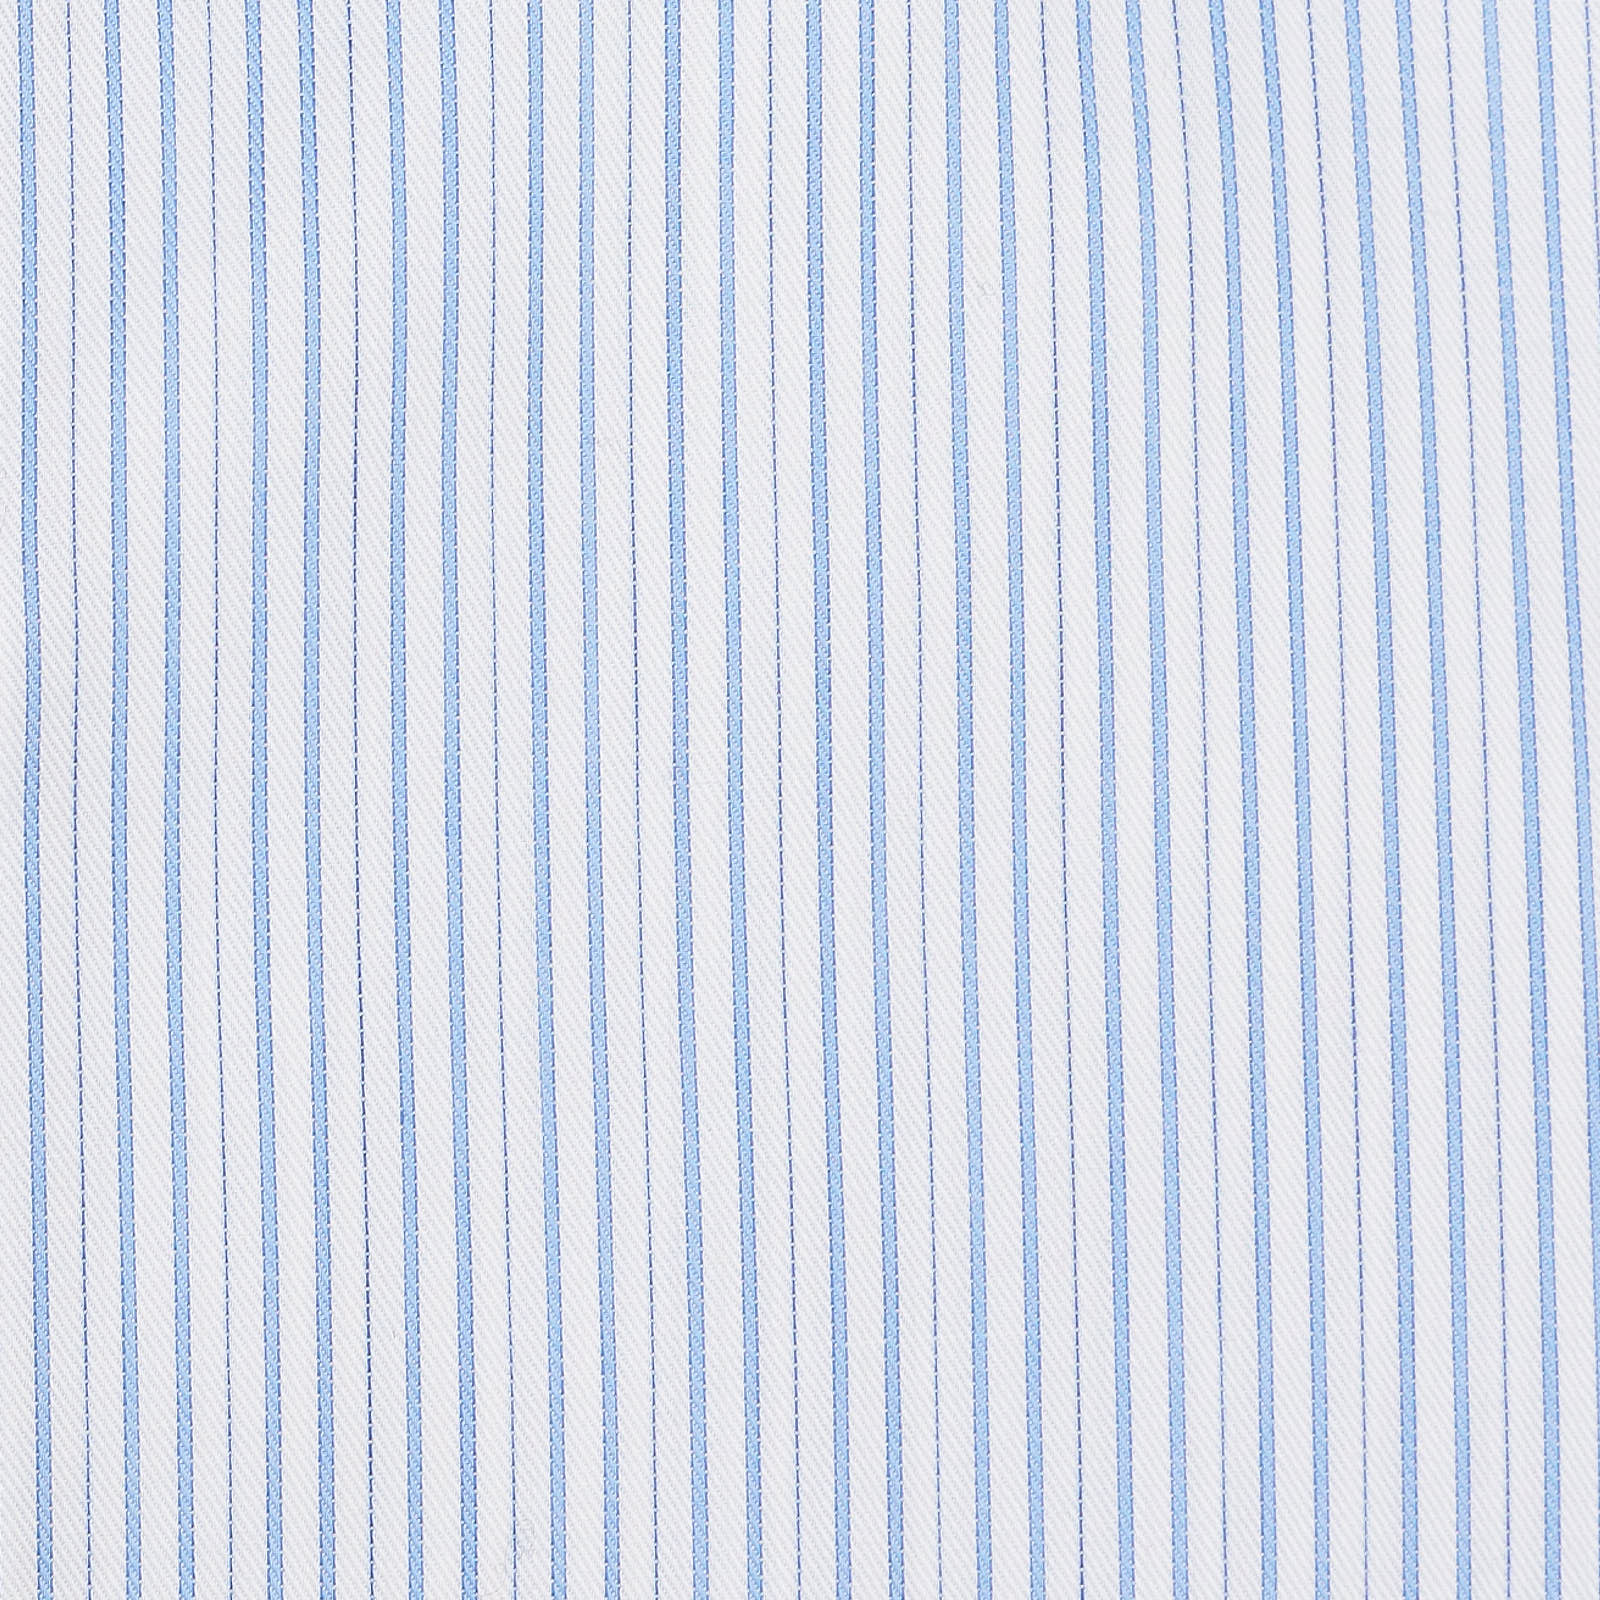 BARBA Napoli Blue-White Striped Twill Cotton French Cuff Dress Shirt EU 44 NEW US 17.5